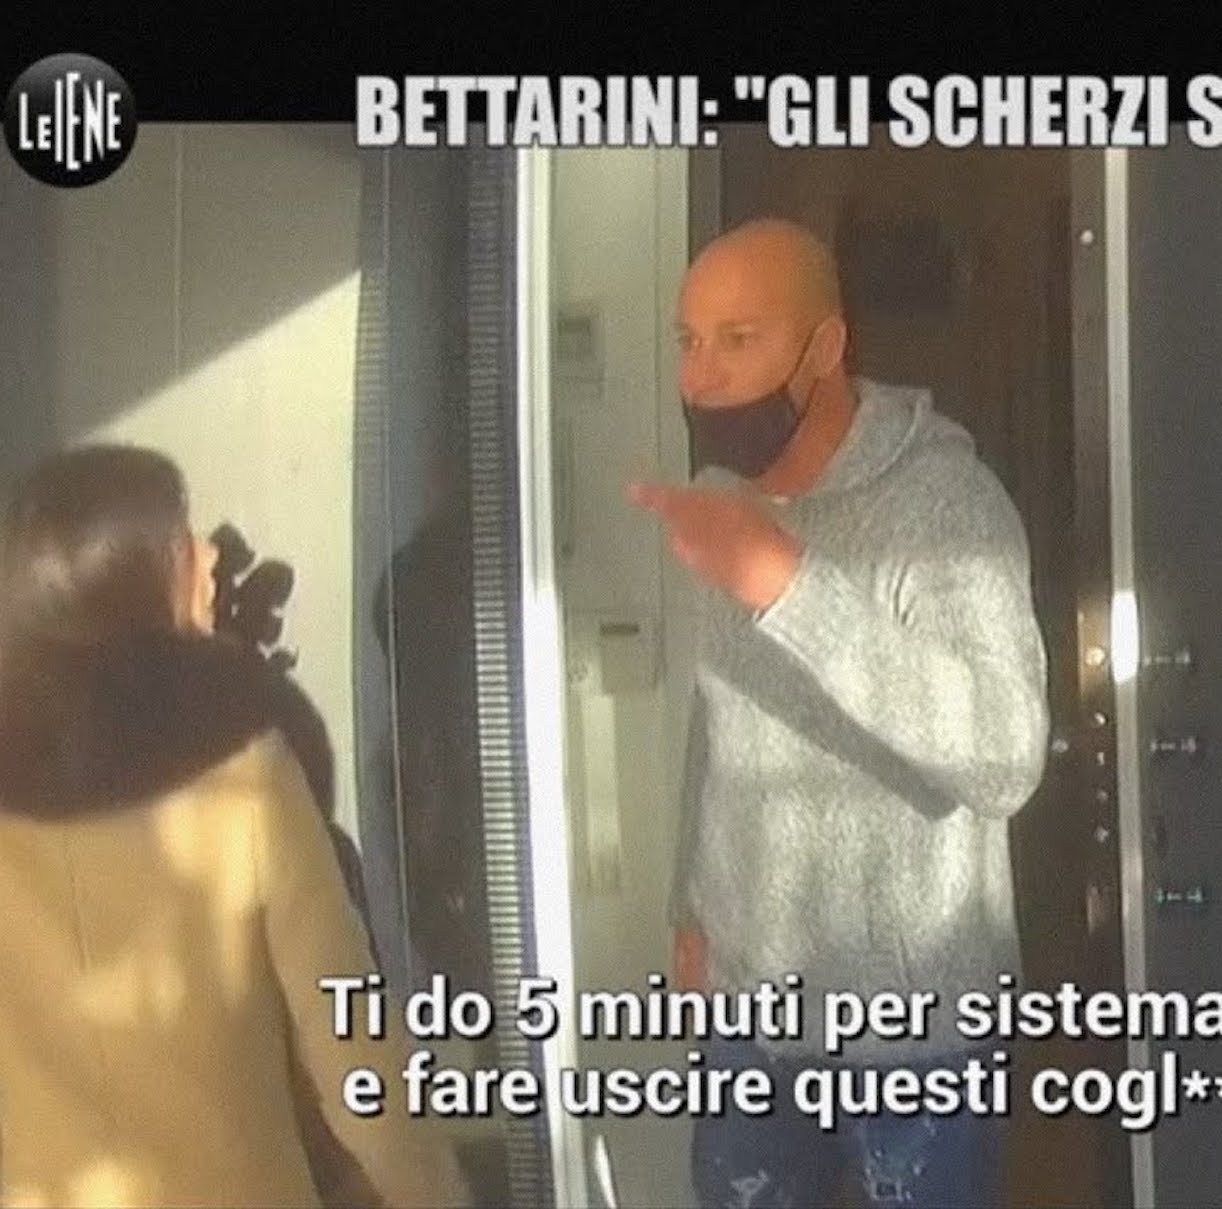 Stefano Bettarini scherzo le iene nicoletta larini